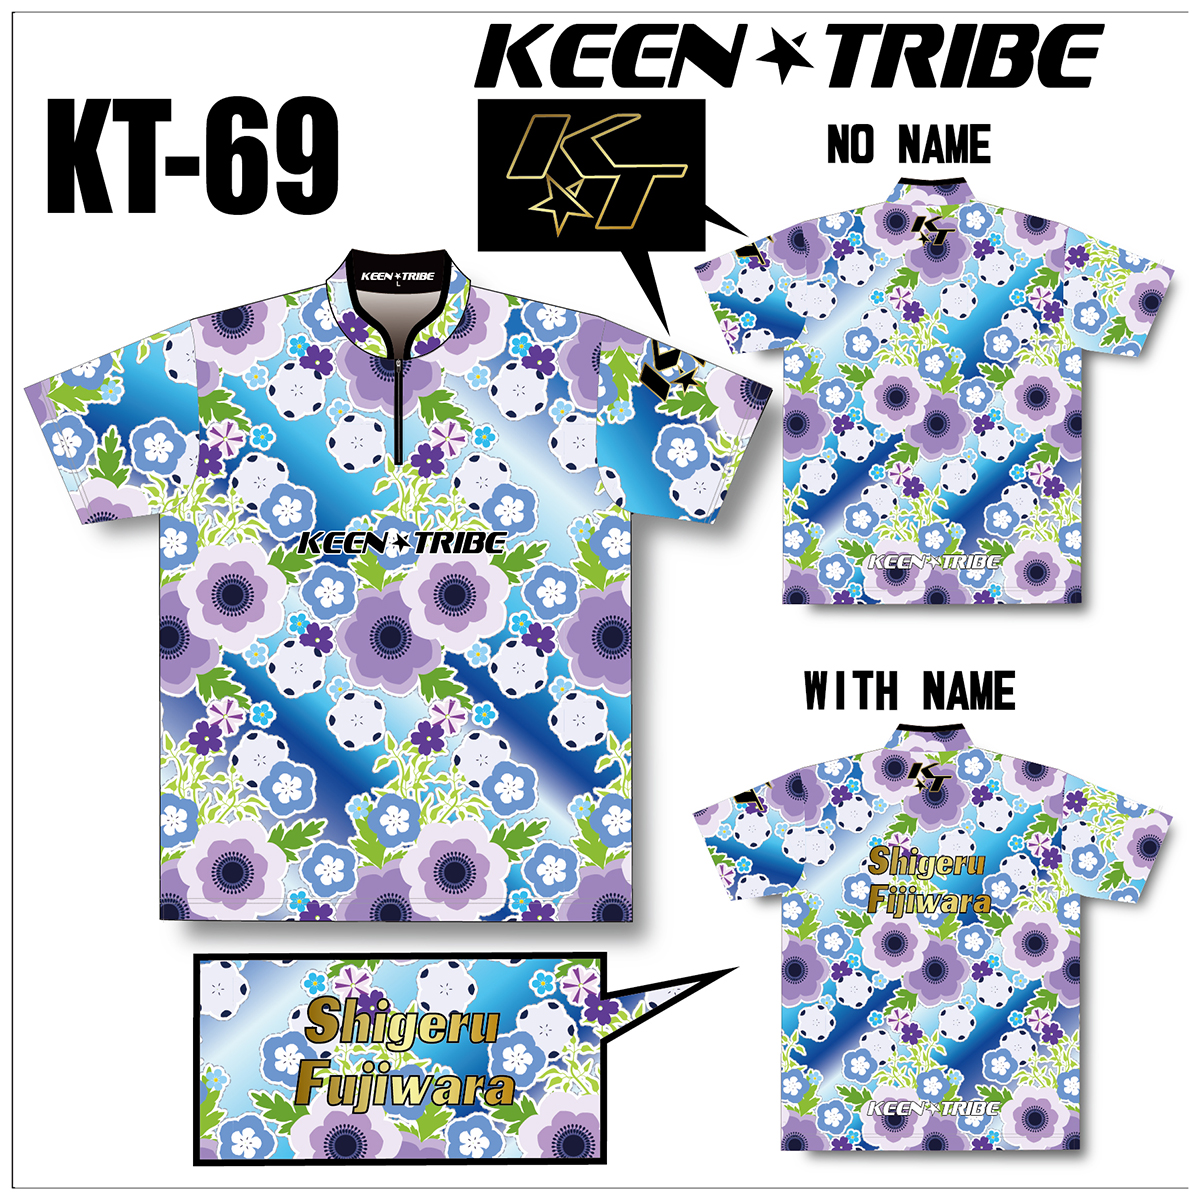 KEEN ★ TRIBE　KT-69(受注生産)【特別価格】